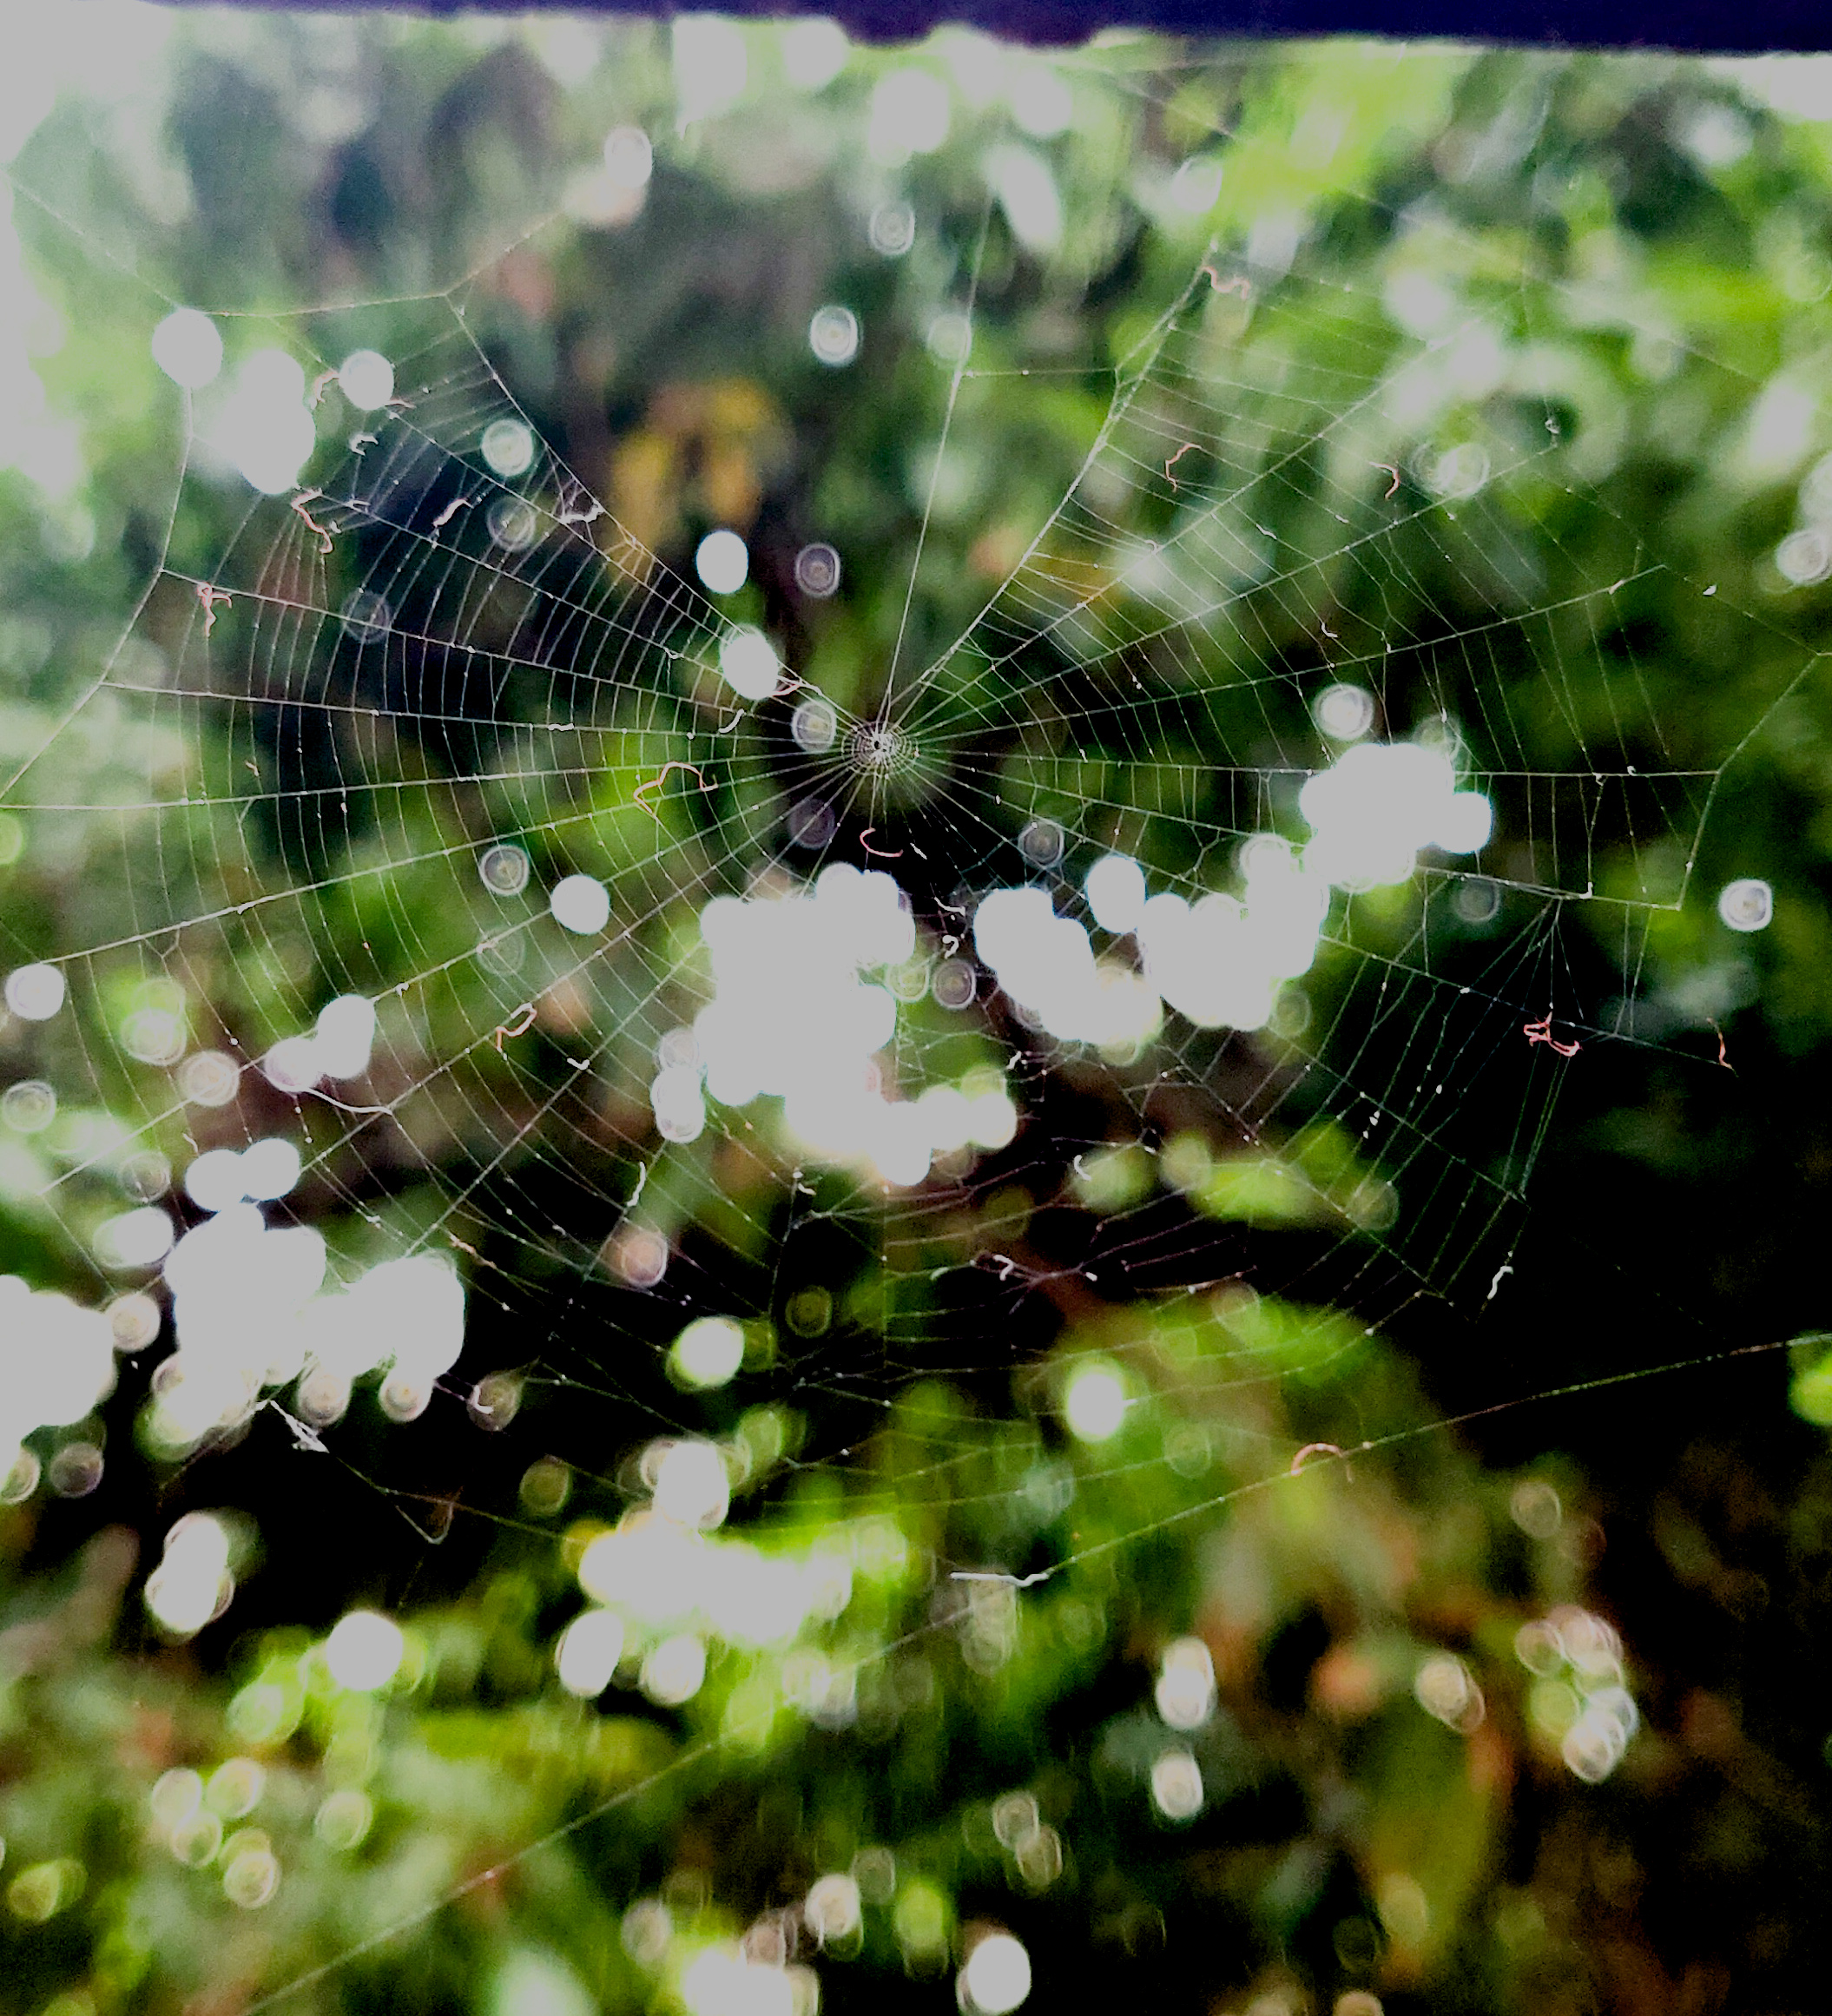 A spider web